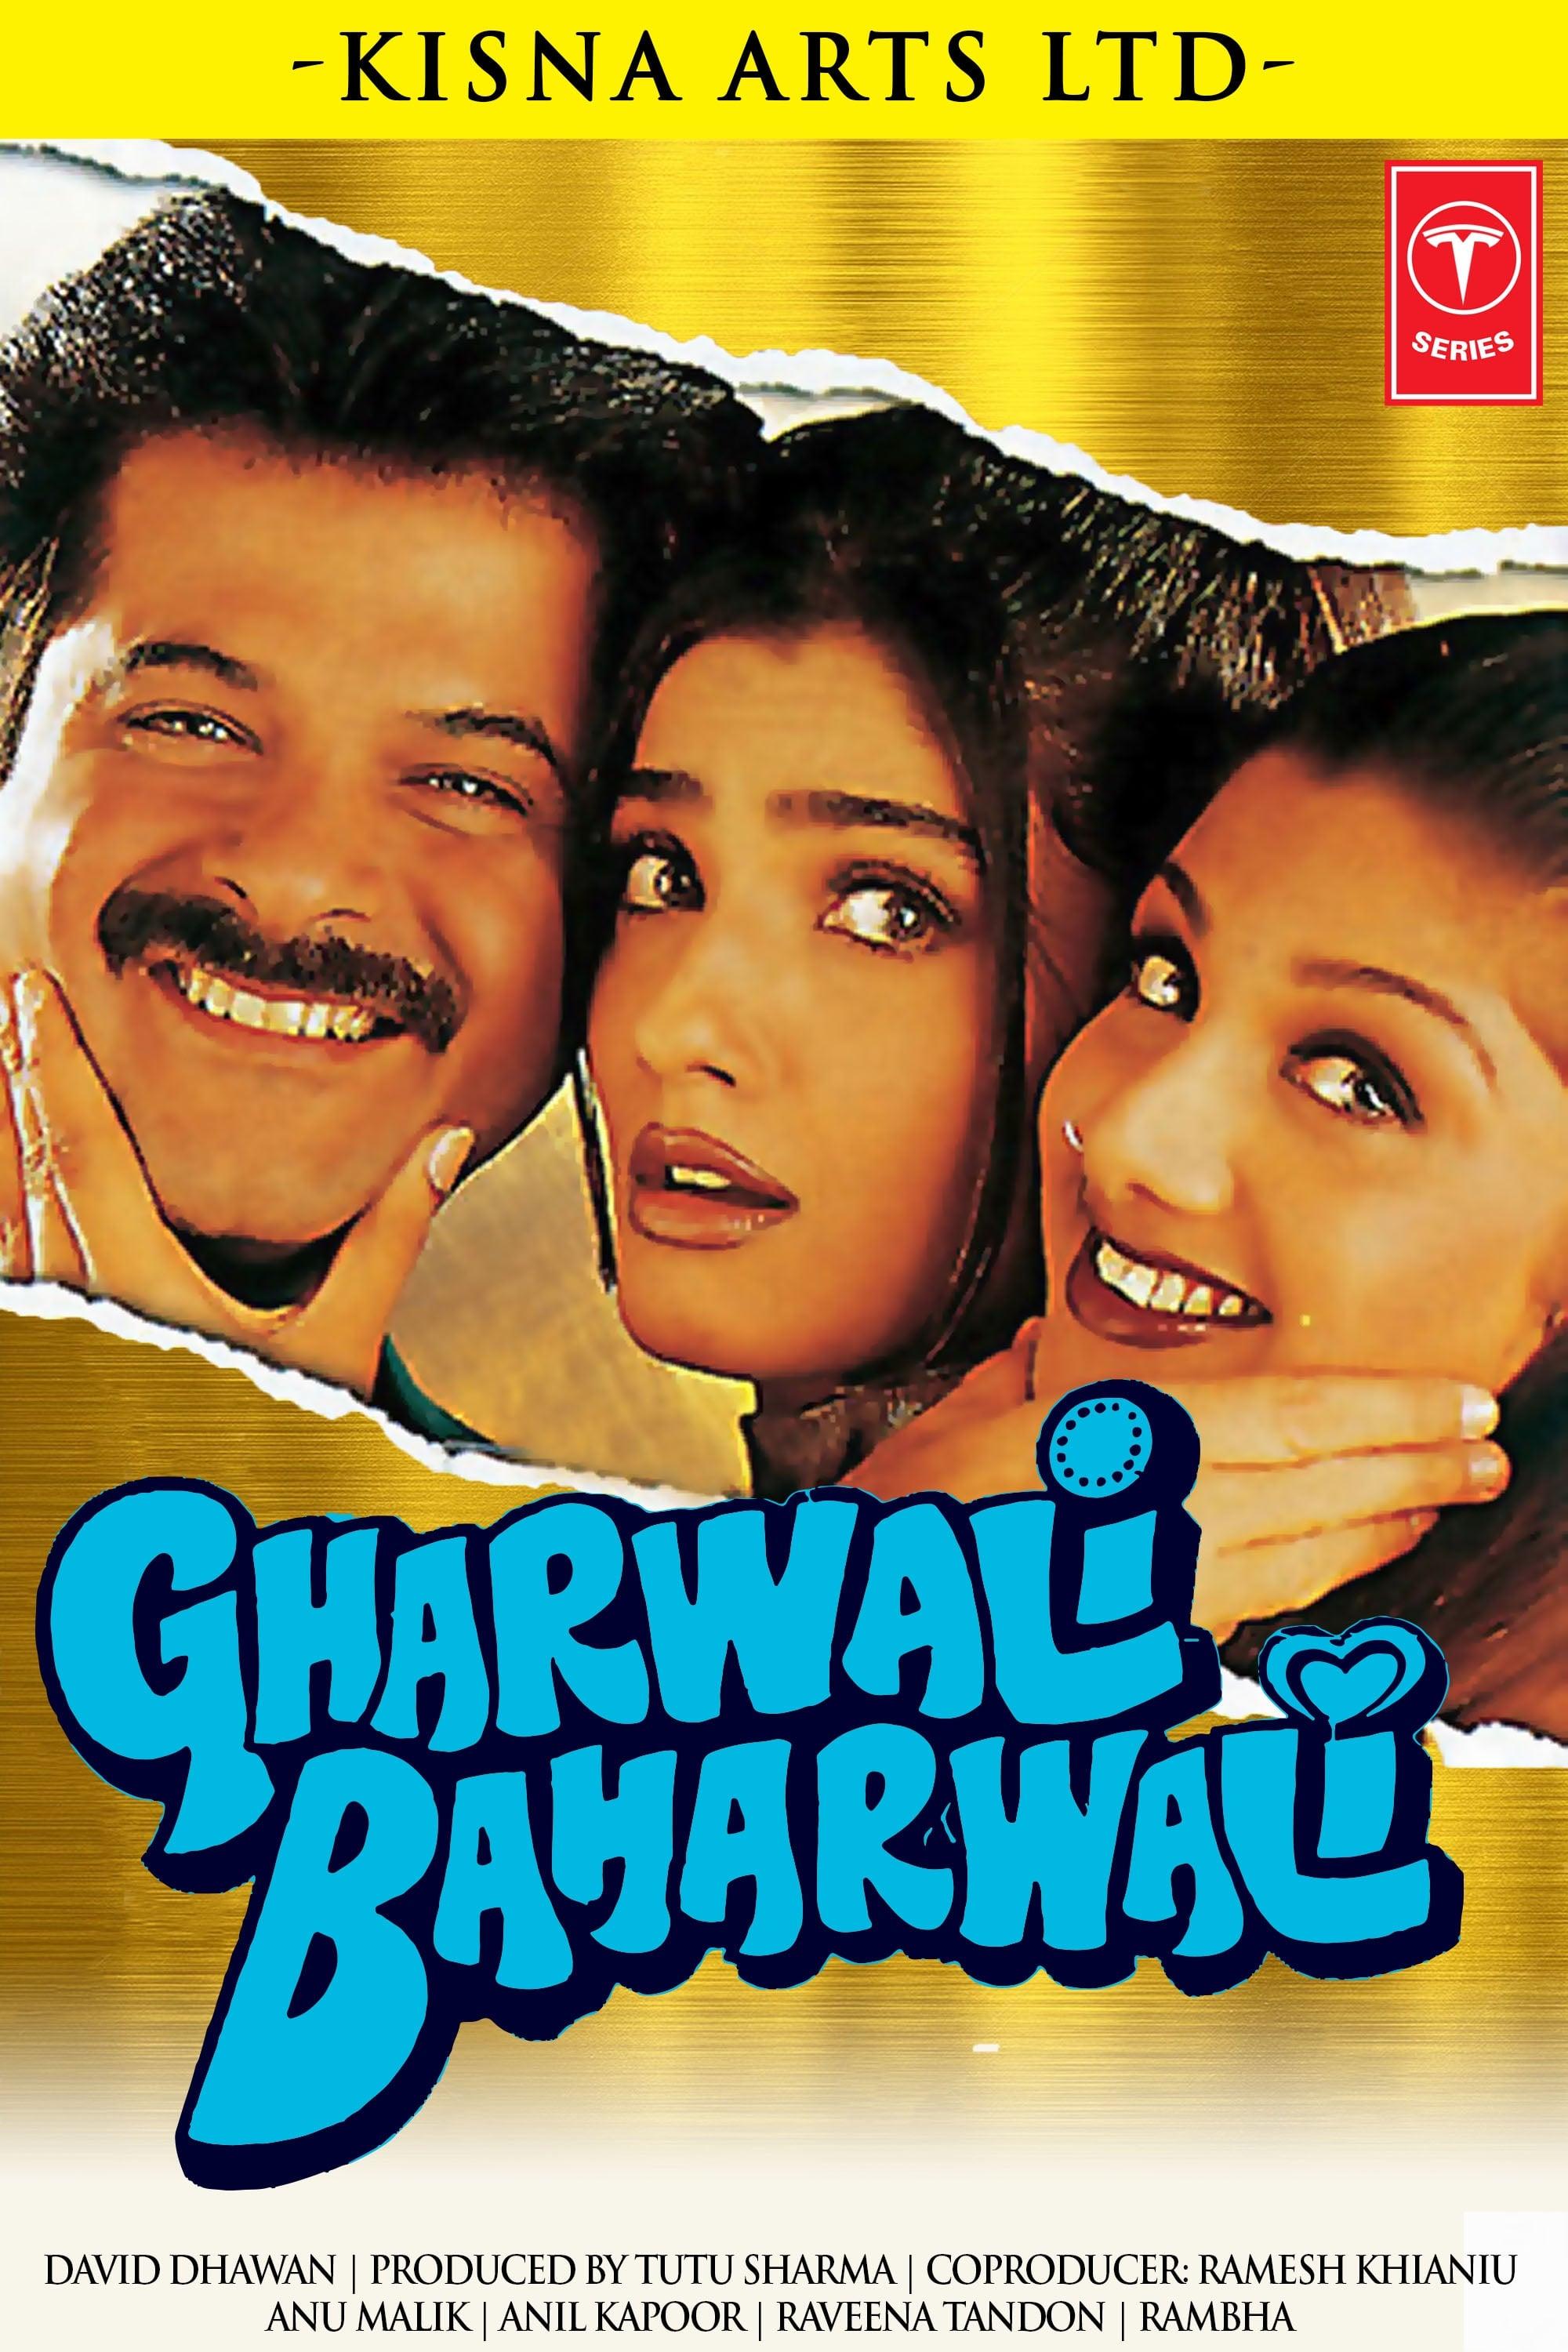 Gharwali Baharwali poster